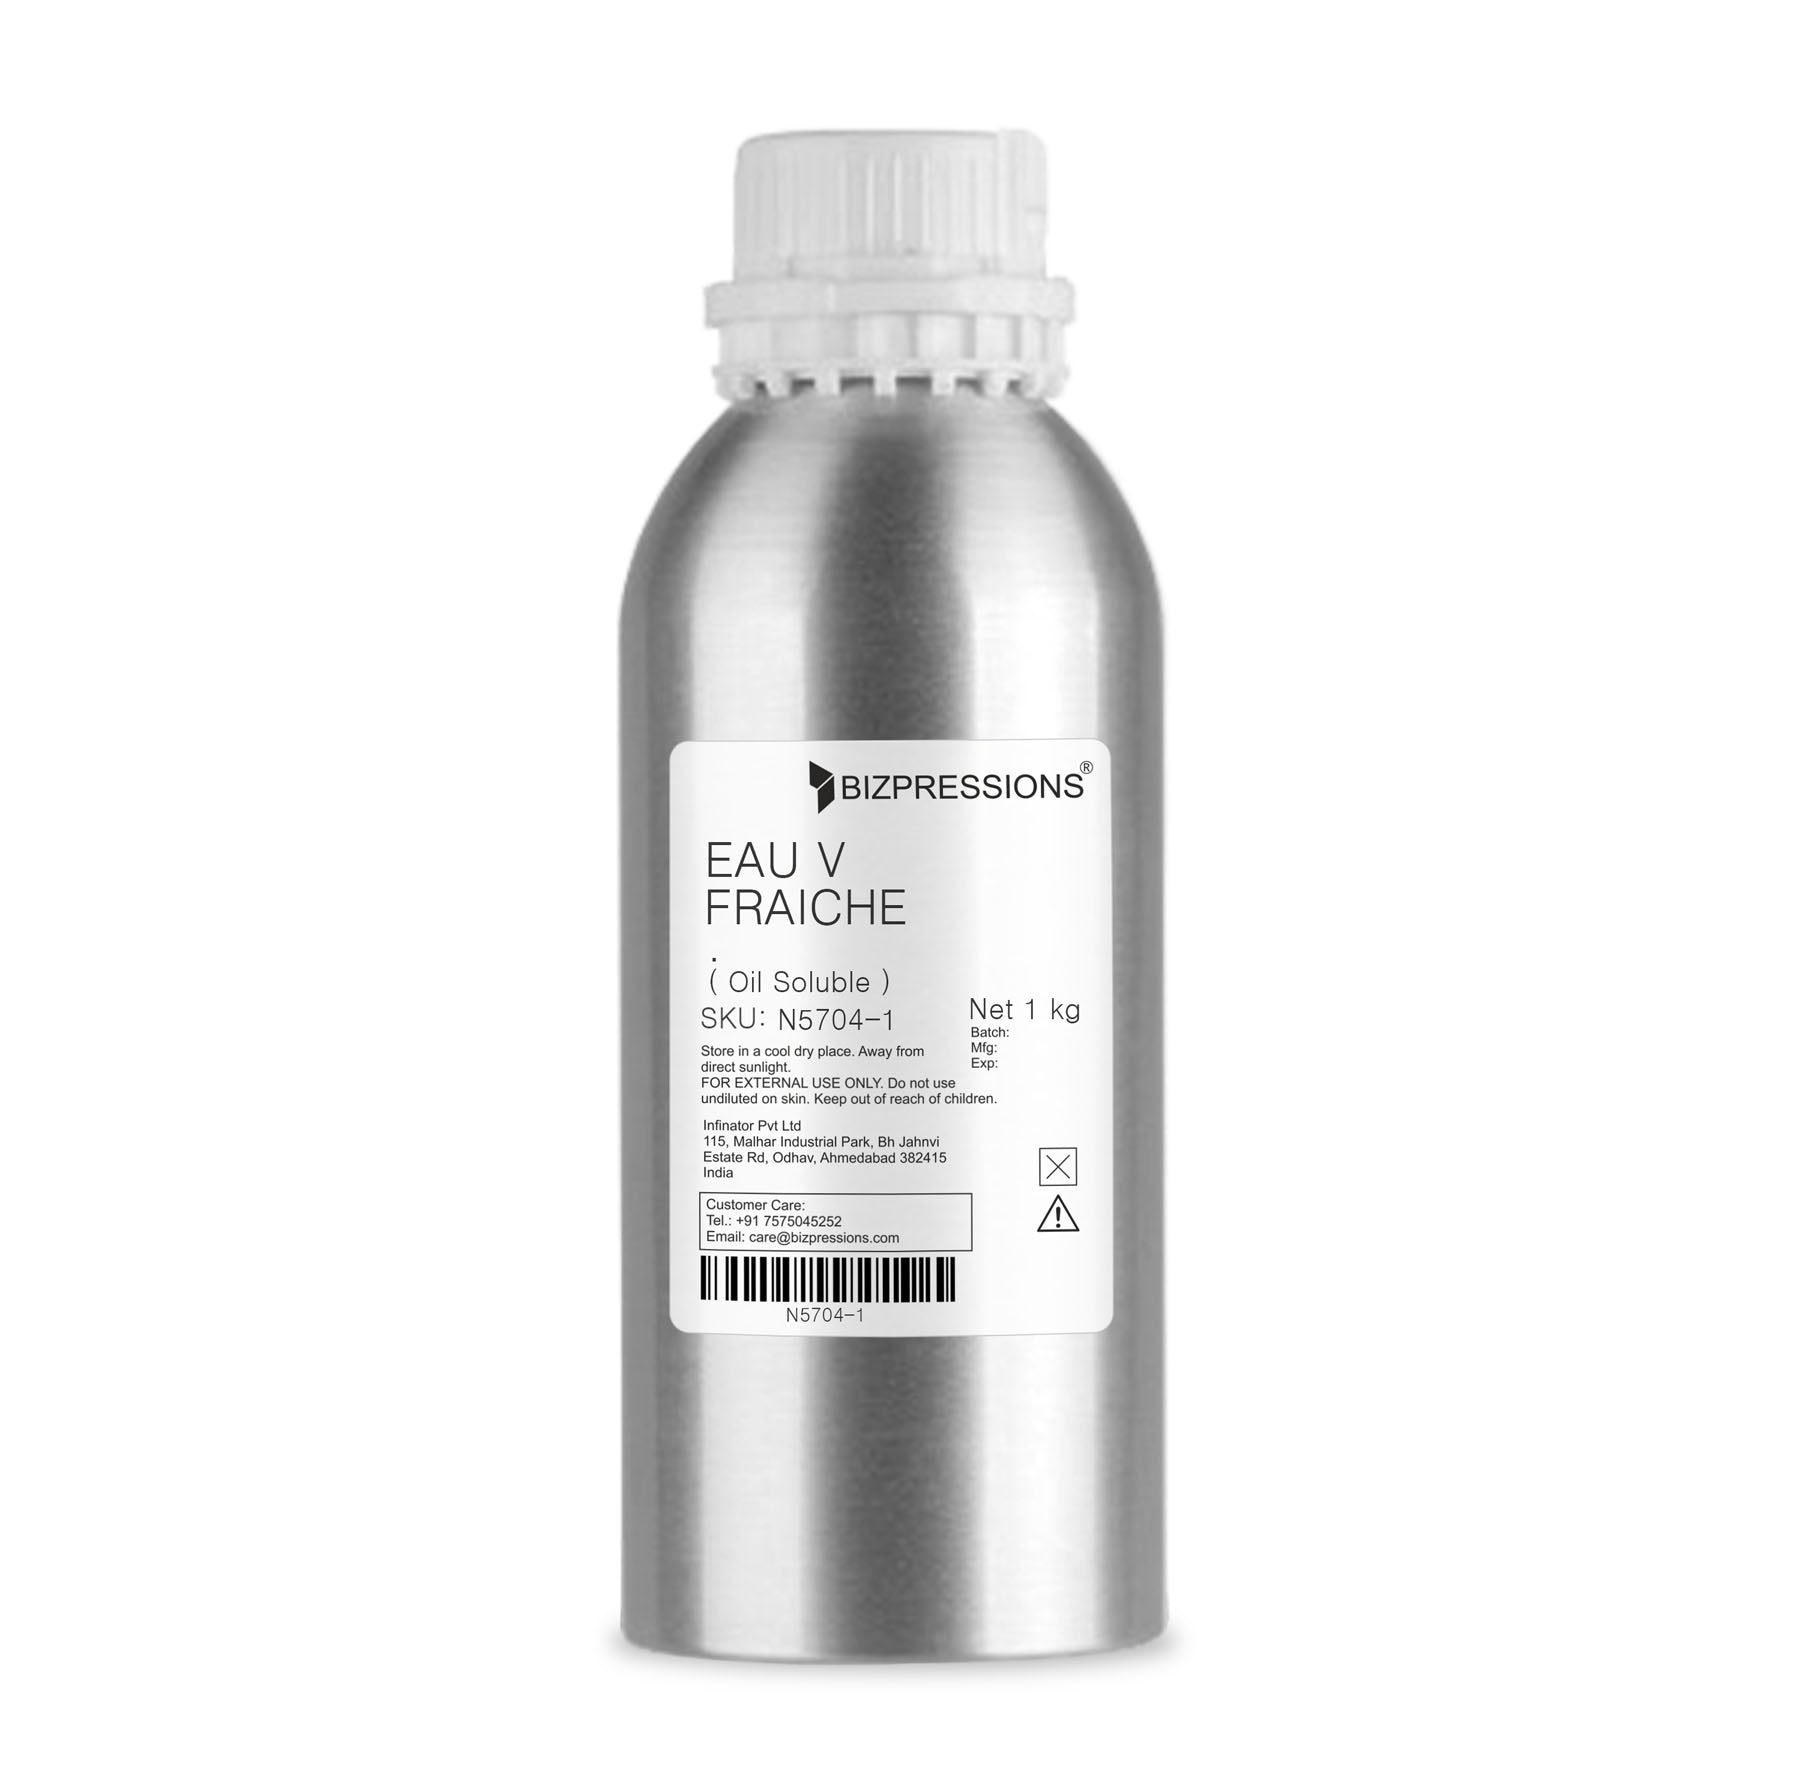 EAU V FRAICHE - Fragrance ( Oil Soluble ) - 1 kg